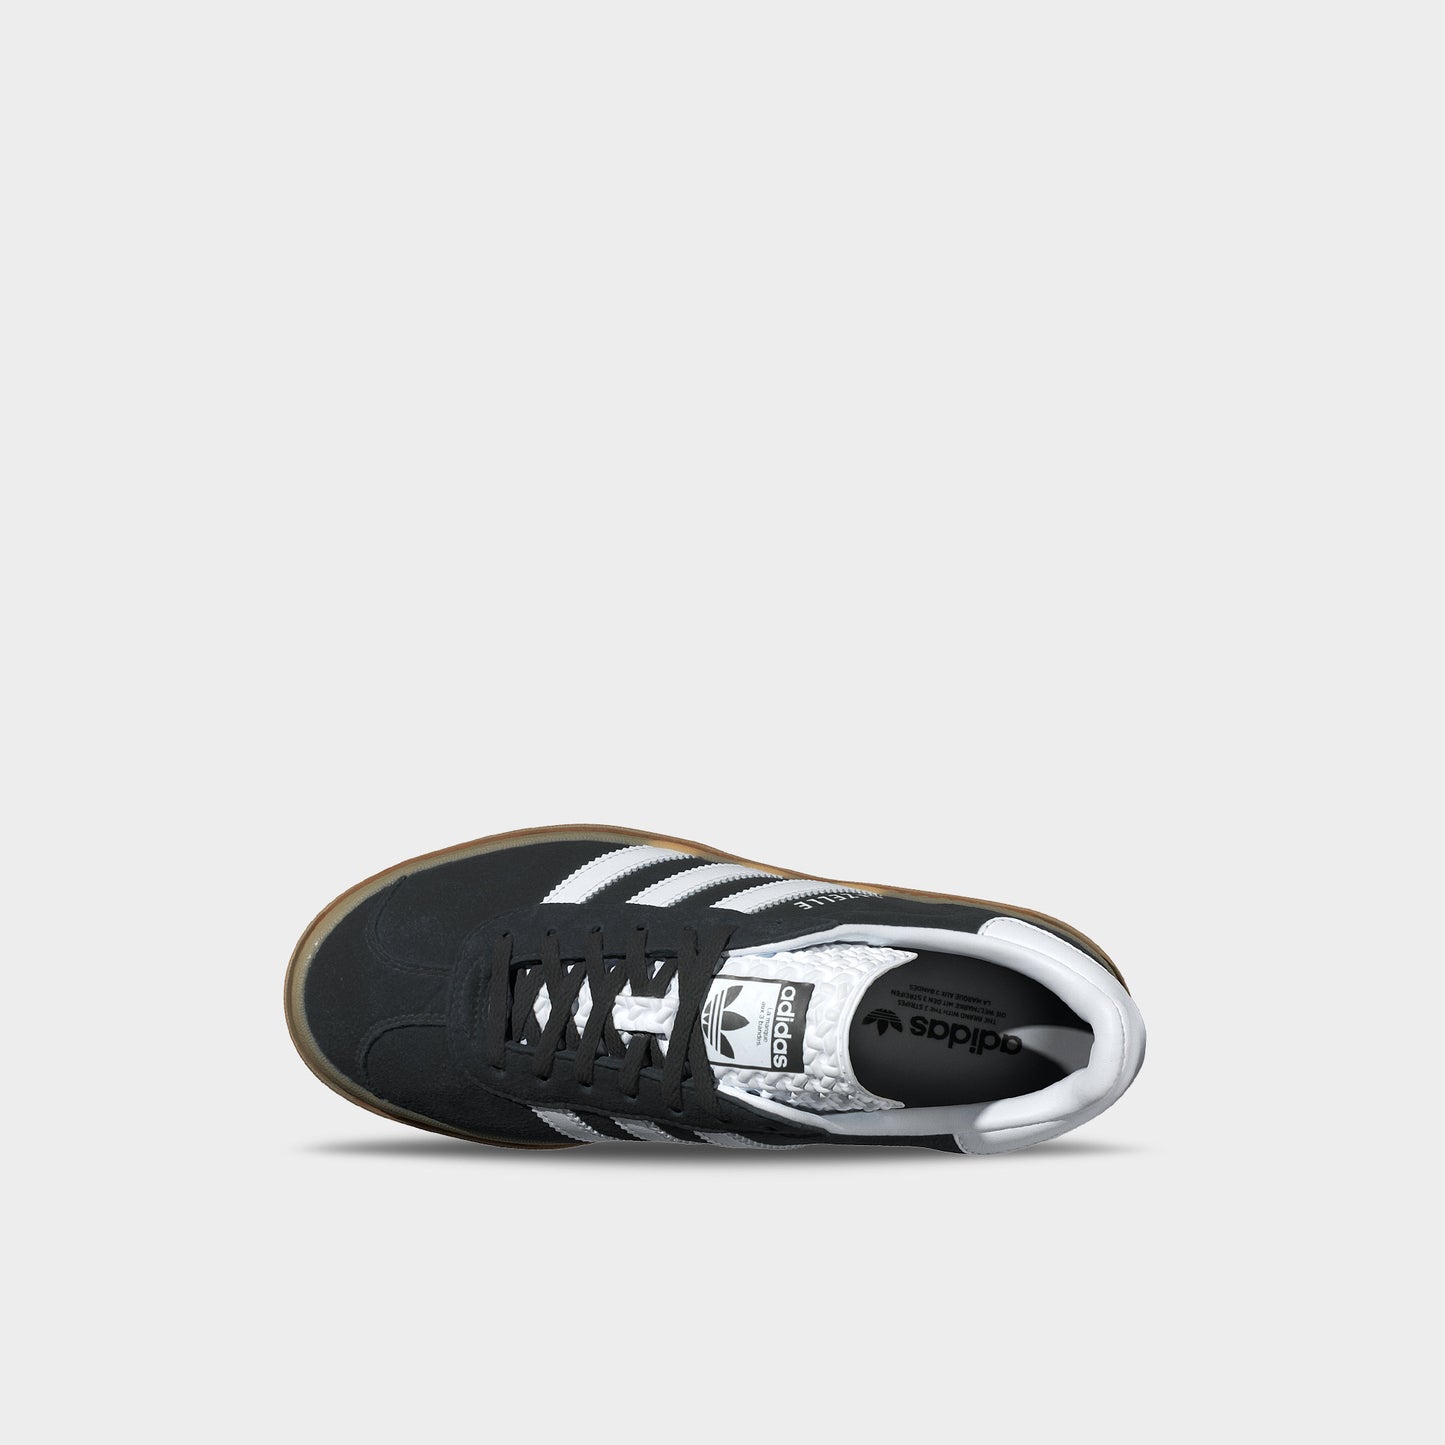 Adidas Gazelle Bold W IE0876 in Farbe coreblack_cloudwhite